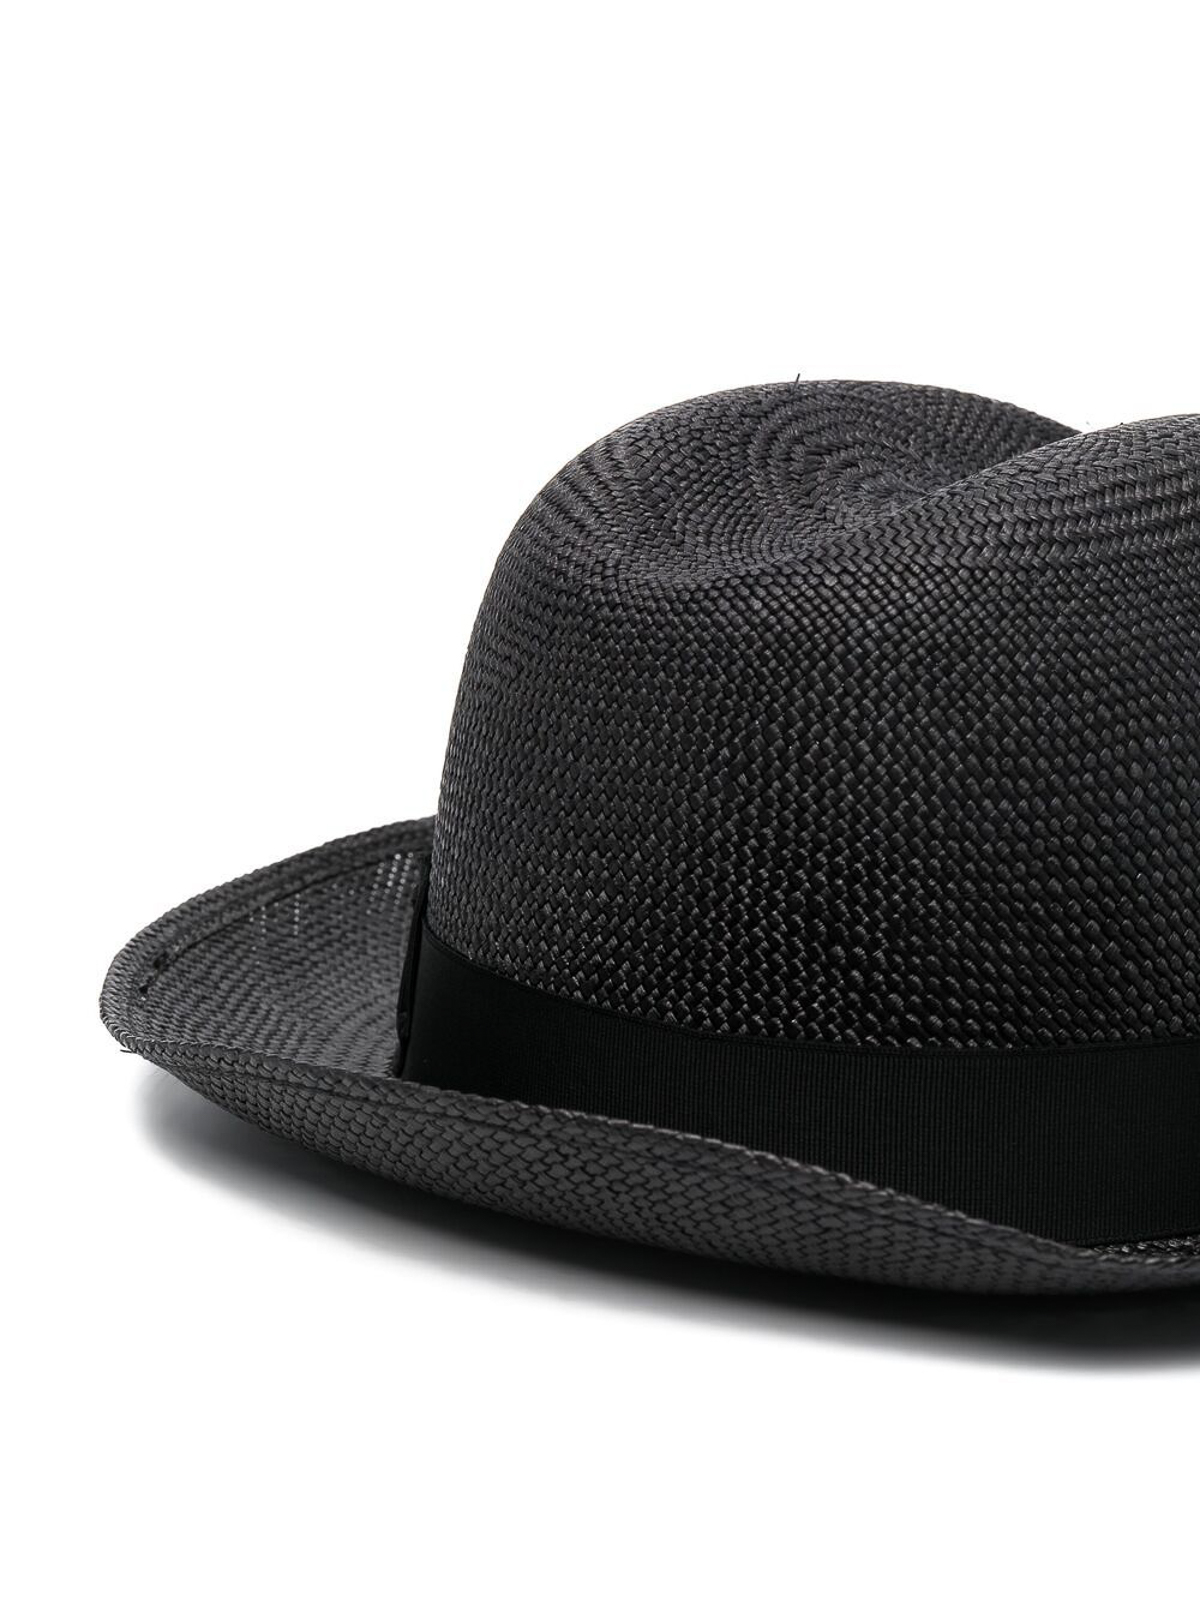 Shop Borsalino Jet-black Straw Curved-brim Hat